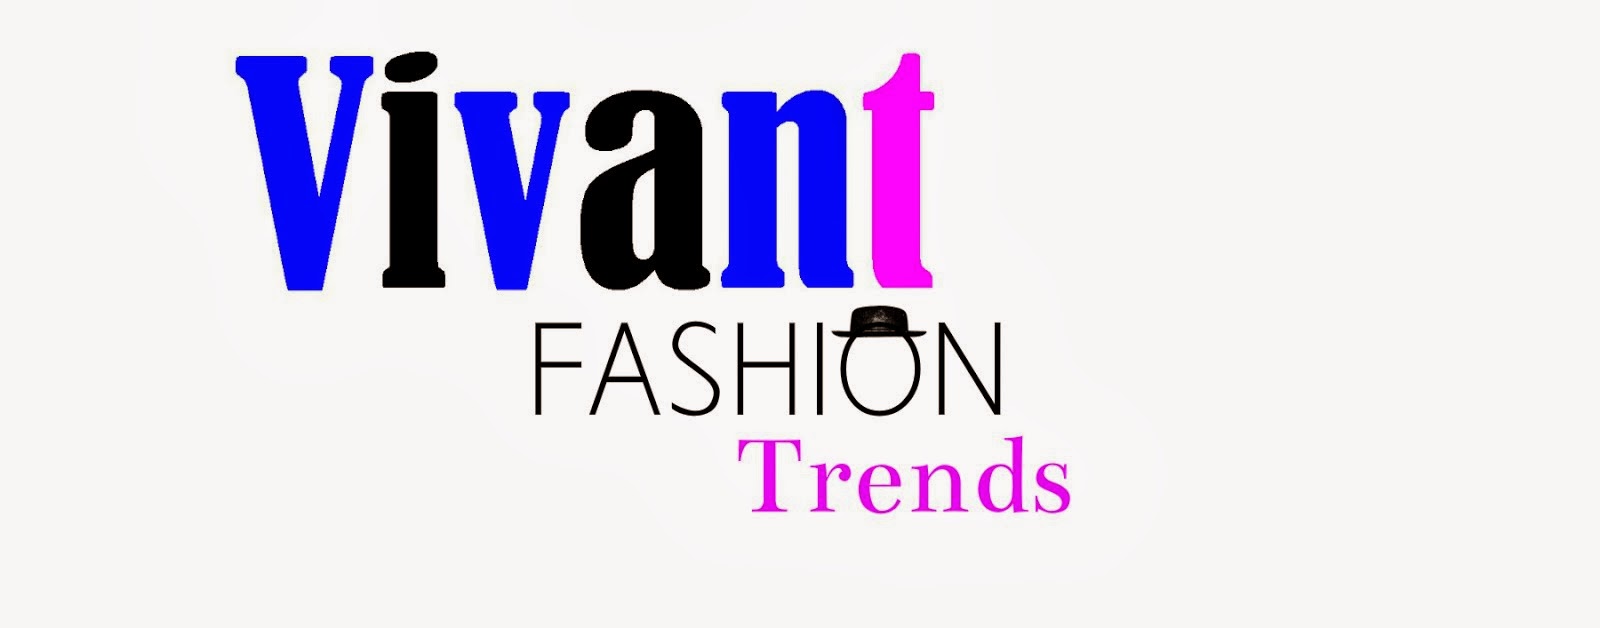 Vivant Fashion Trends